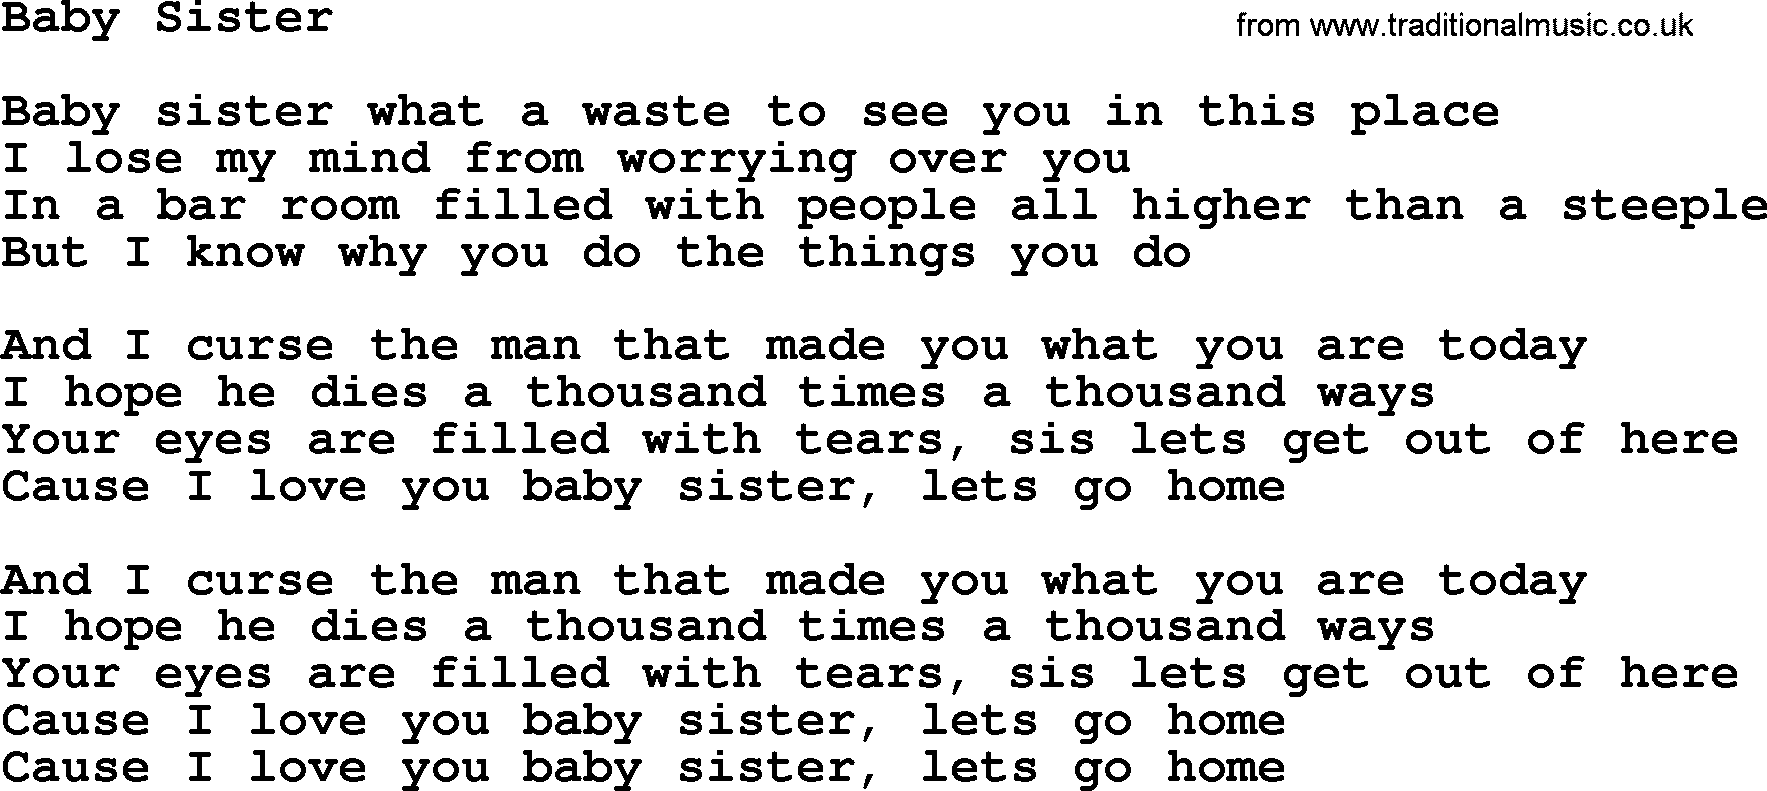 Dolly Parton song Baby Sister.txt lyrics